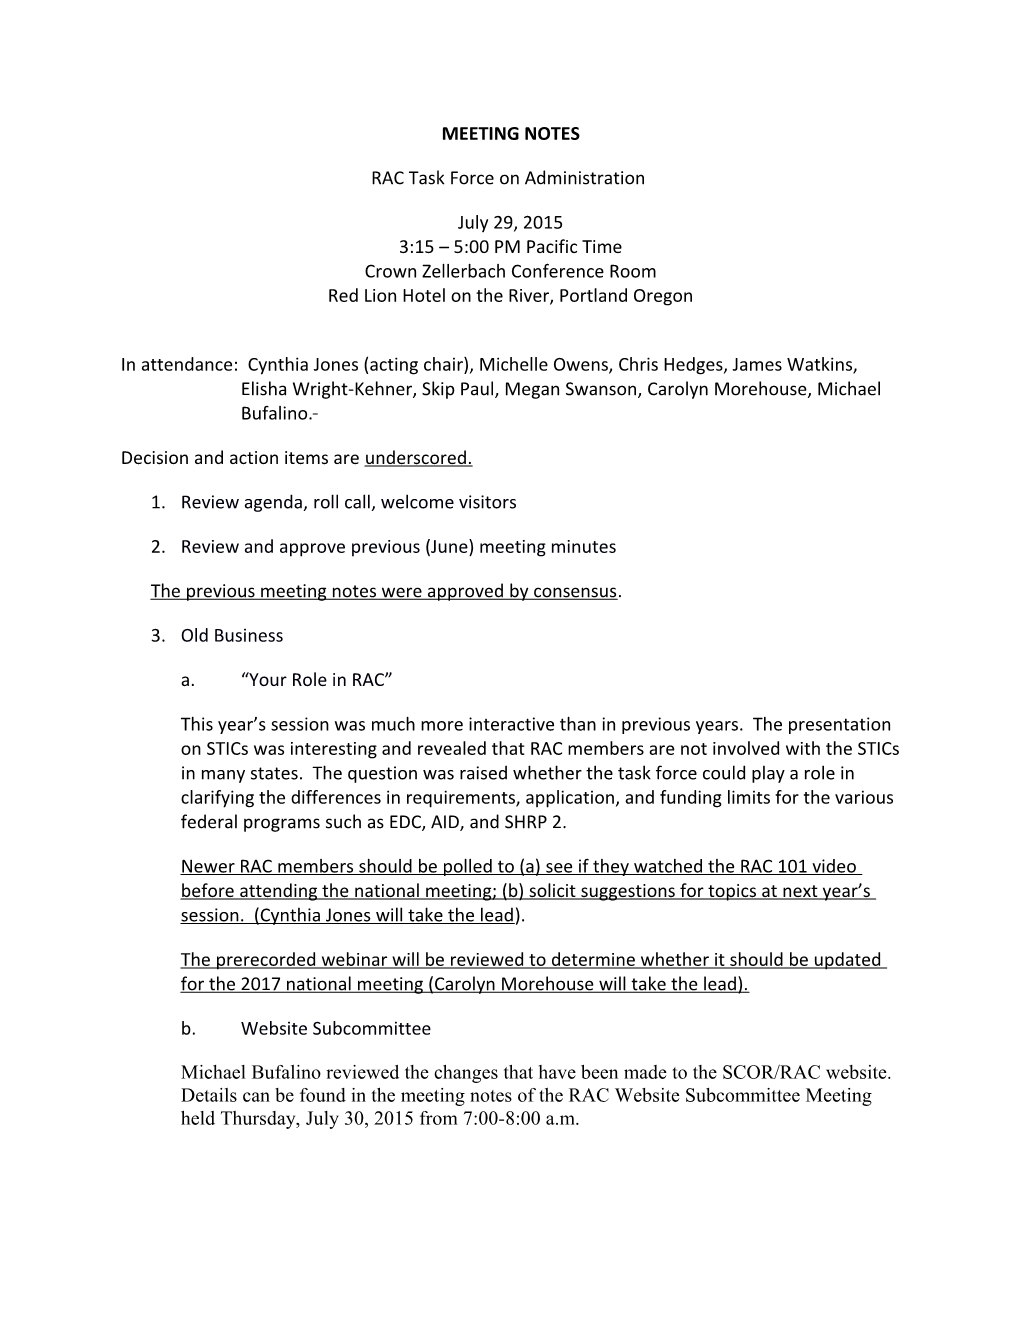 Admin TF Meeting Notes: July 29, 2015